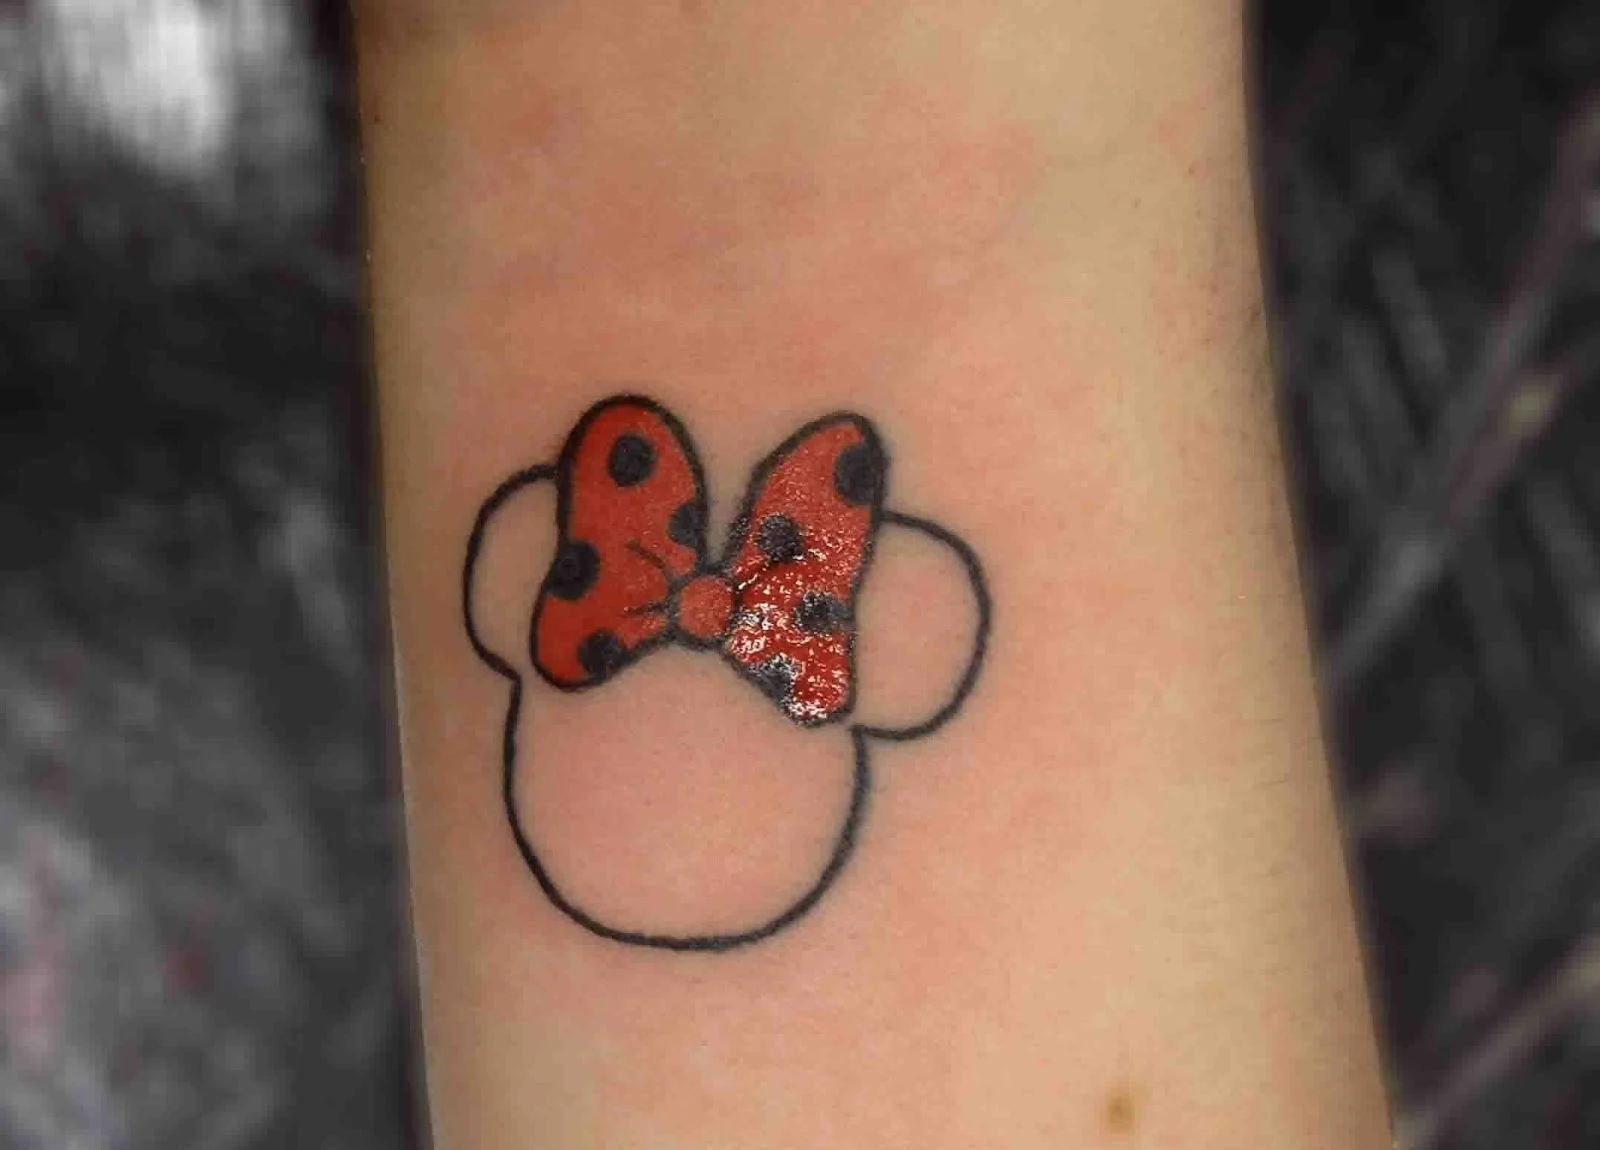 Tatuajes de Micky y Minnie